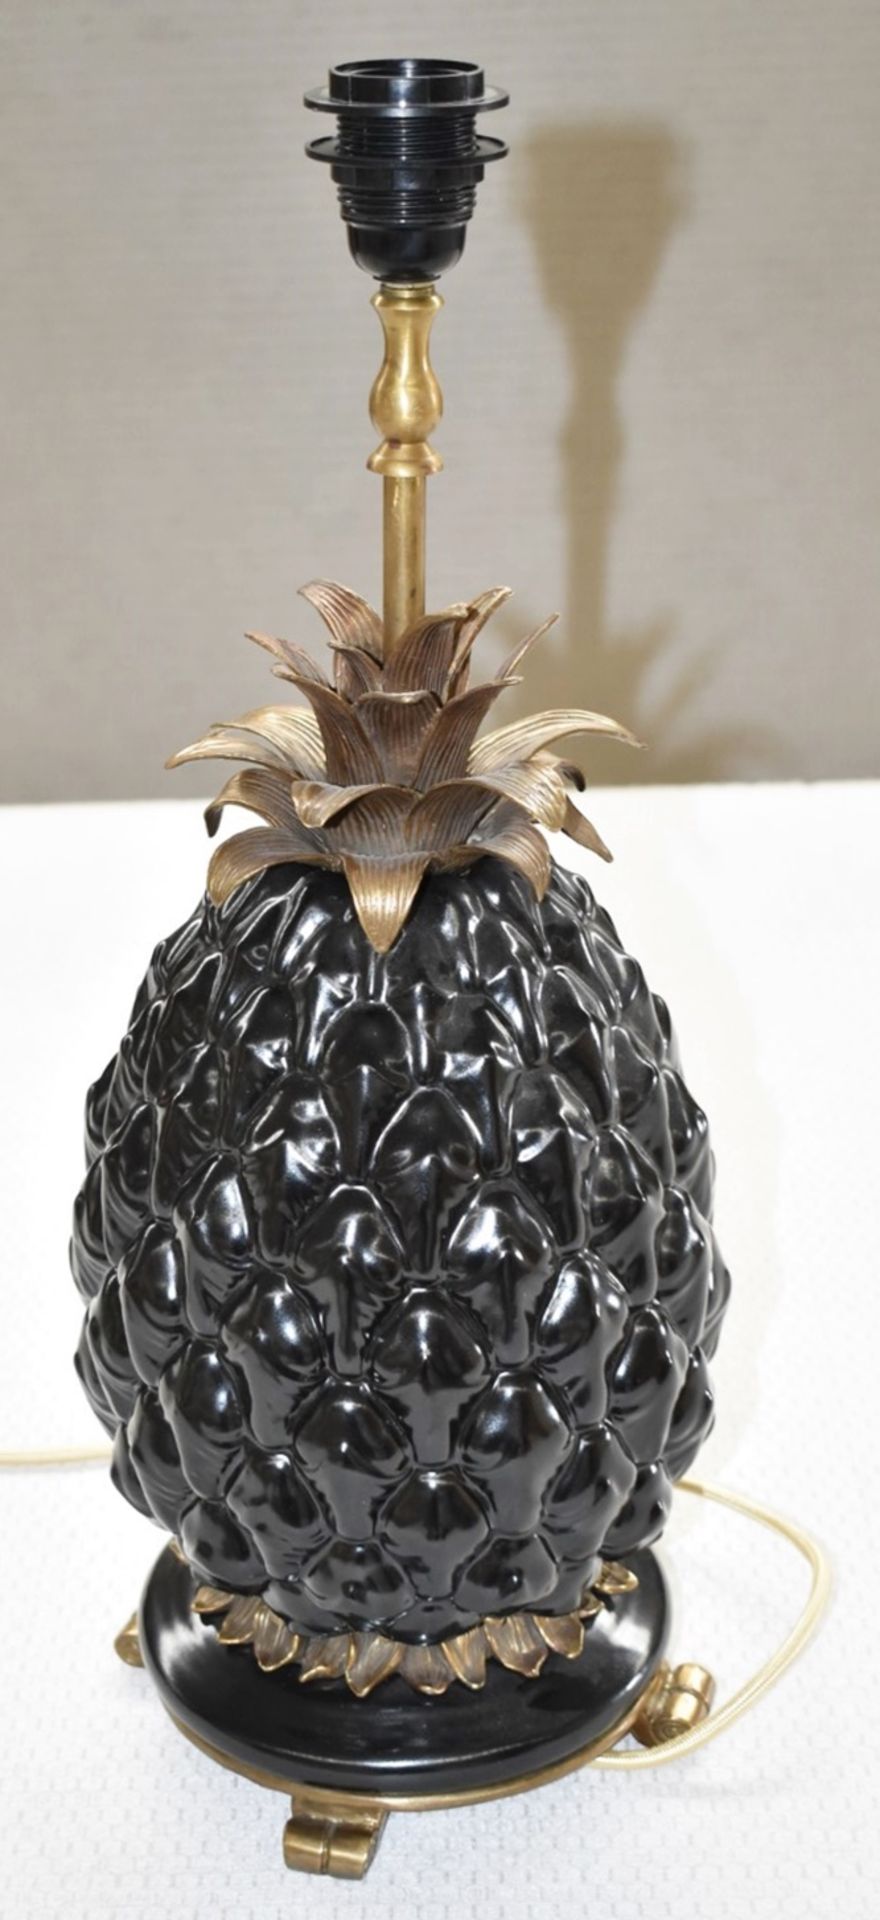 1 x HOUSE OF HACKNEY 'Ananas' Ceramic Pineapple Lamp Stand In Black - Original RRP £545.00 - Image 3 of 8